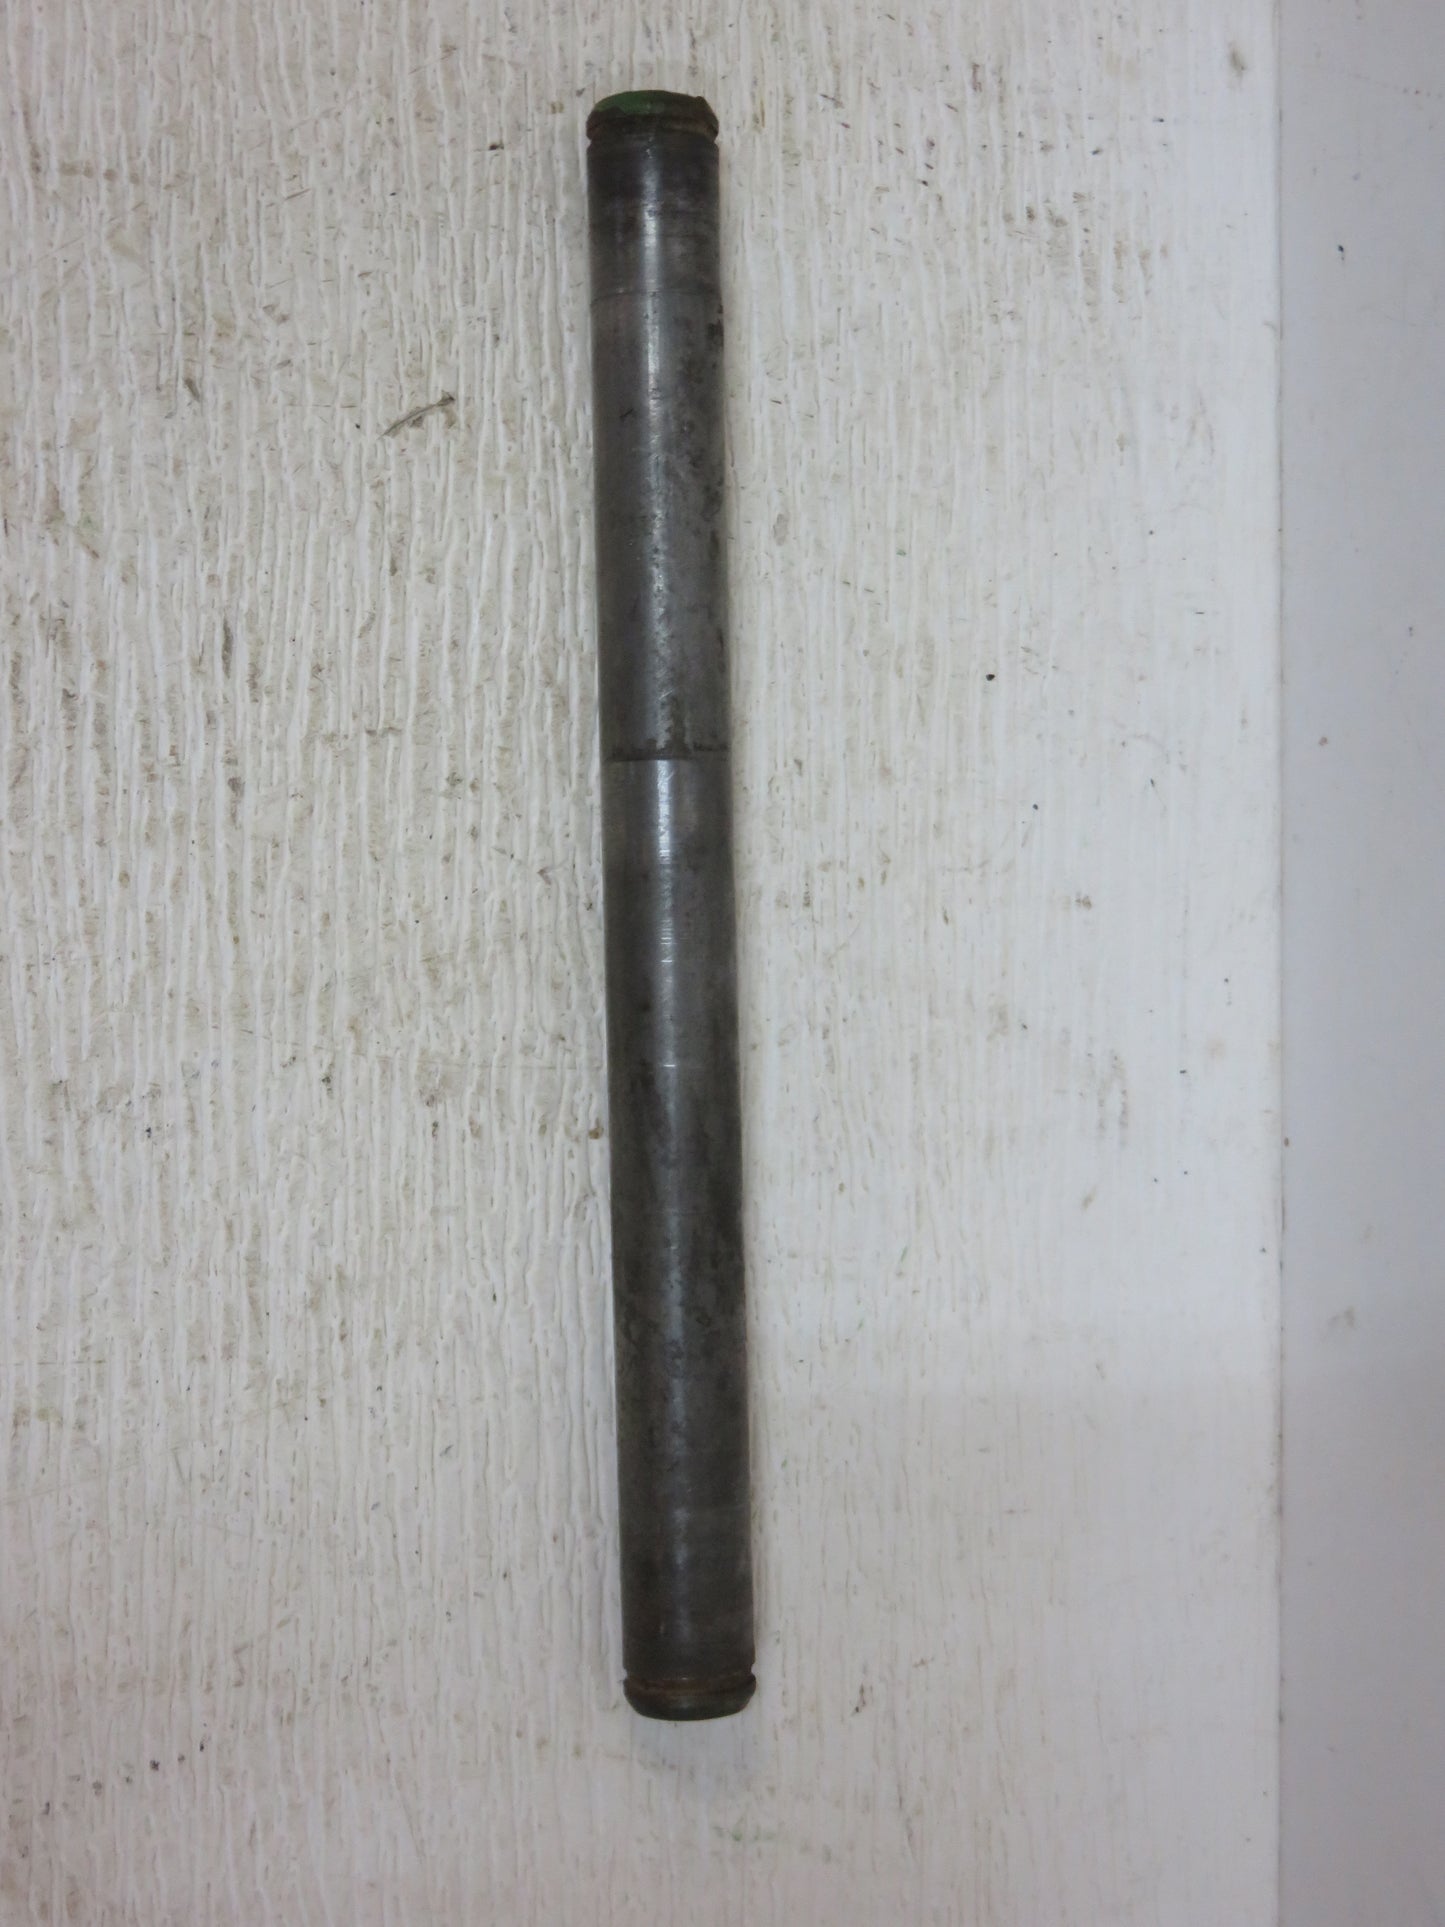 M1945T John Deere Clutch Pedal Shaft For 40, 320, 420, 330, 430, 435